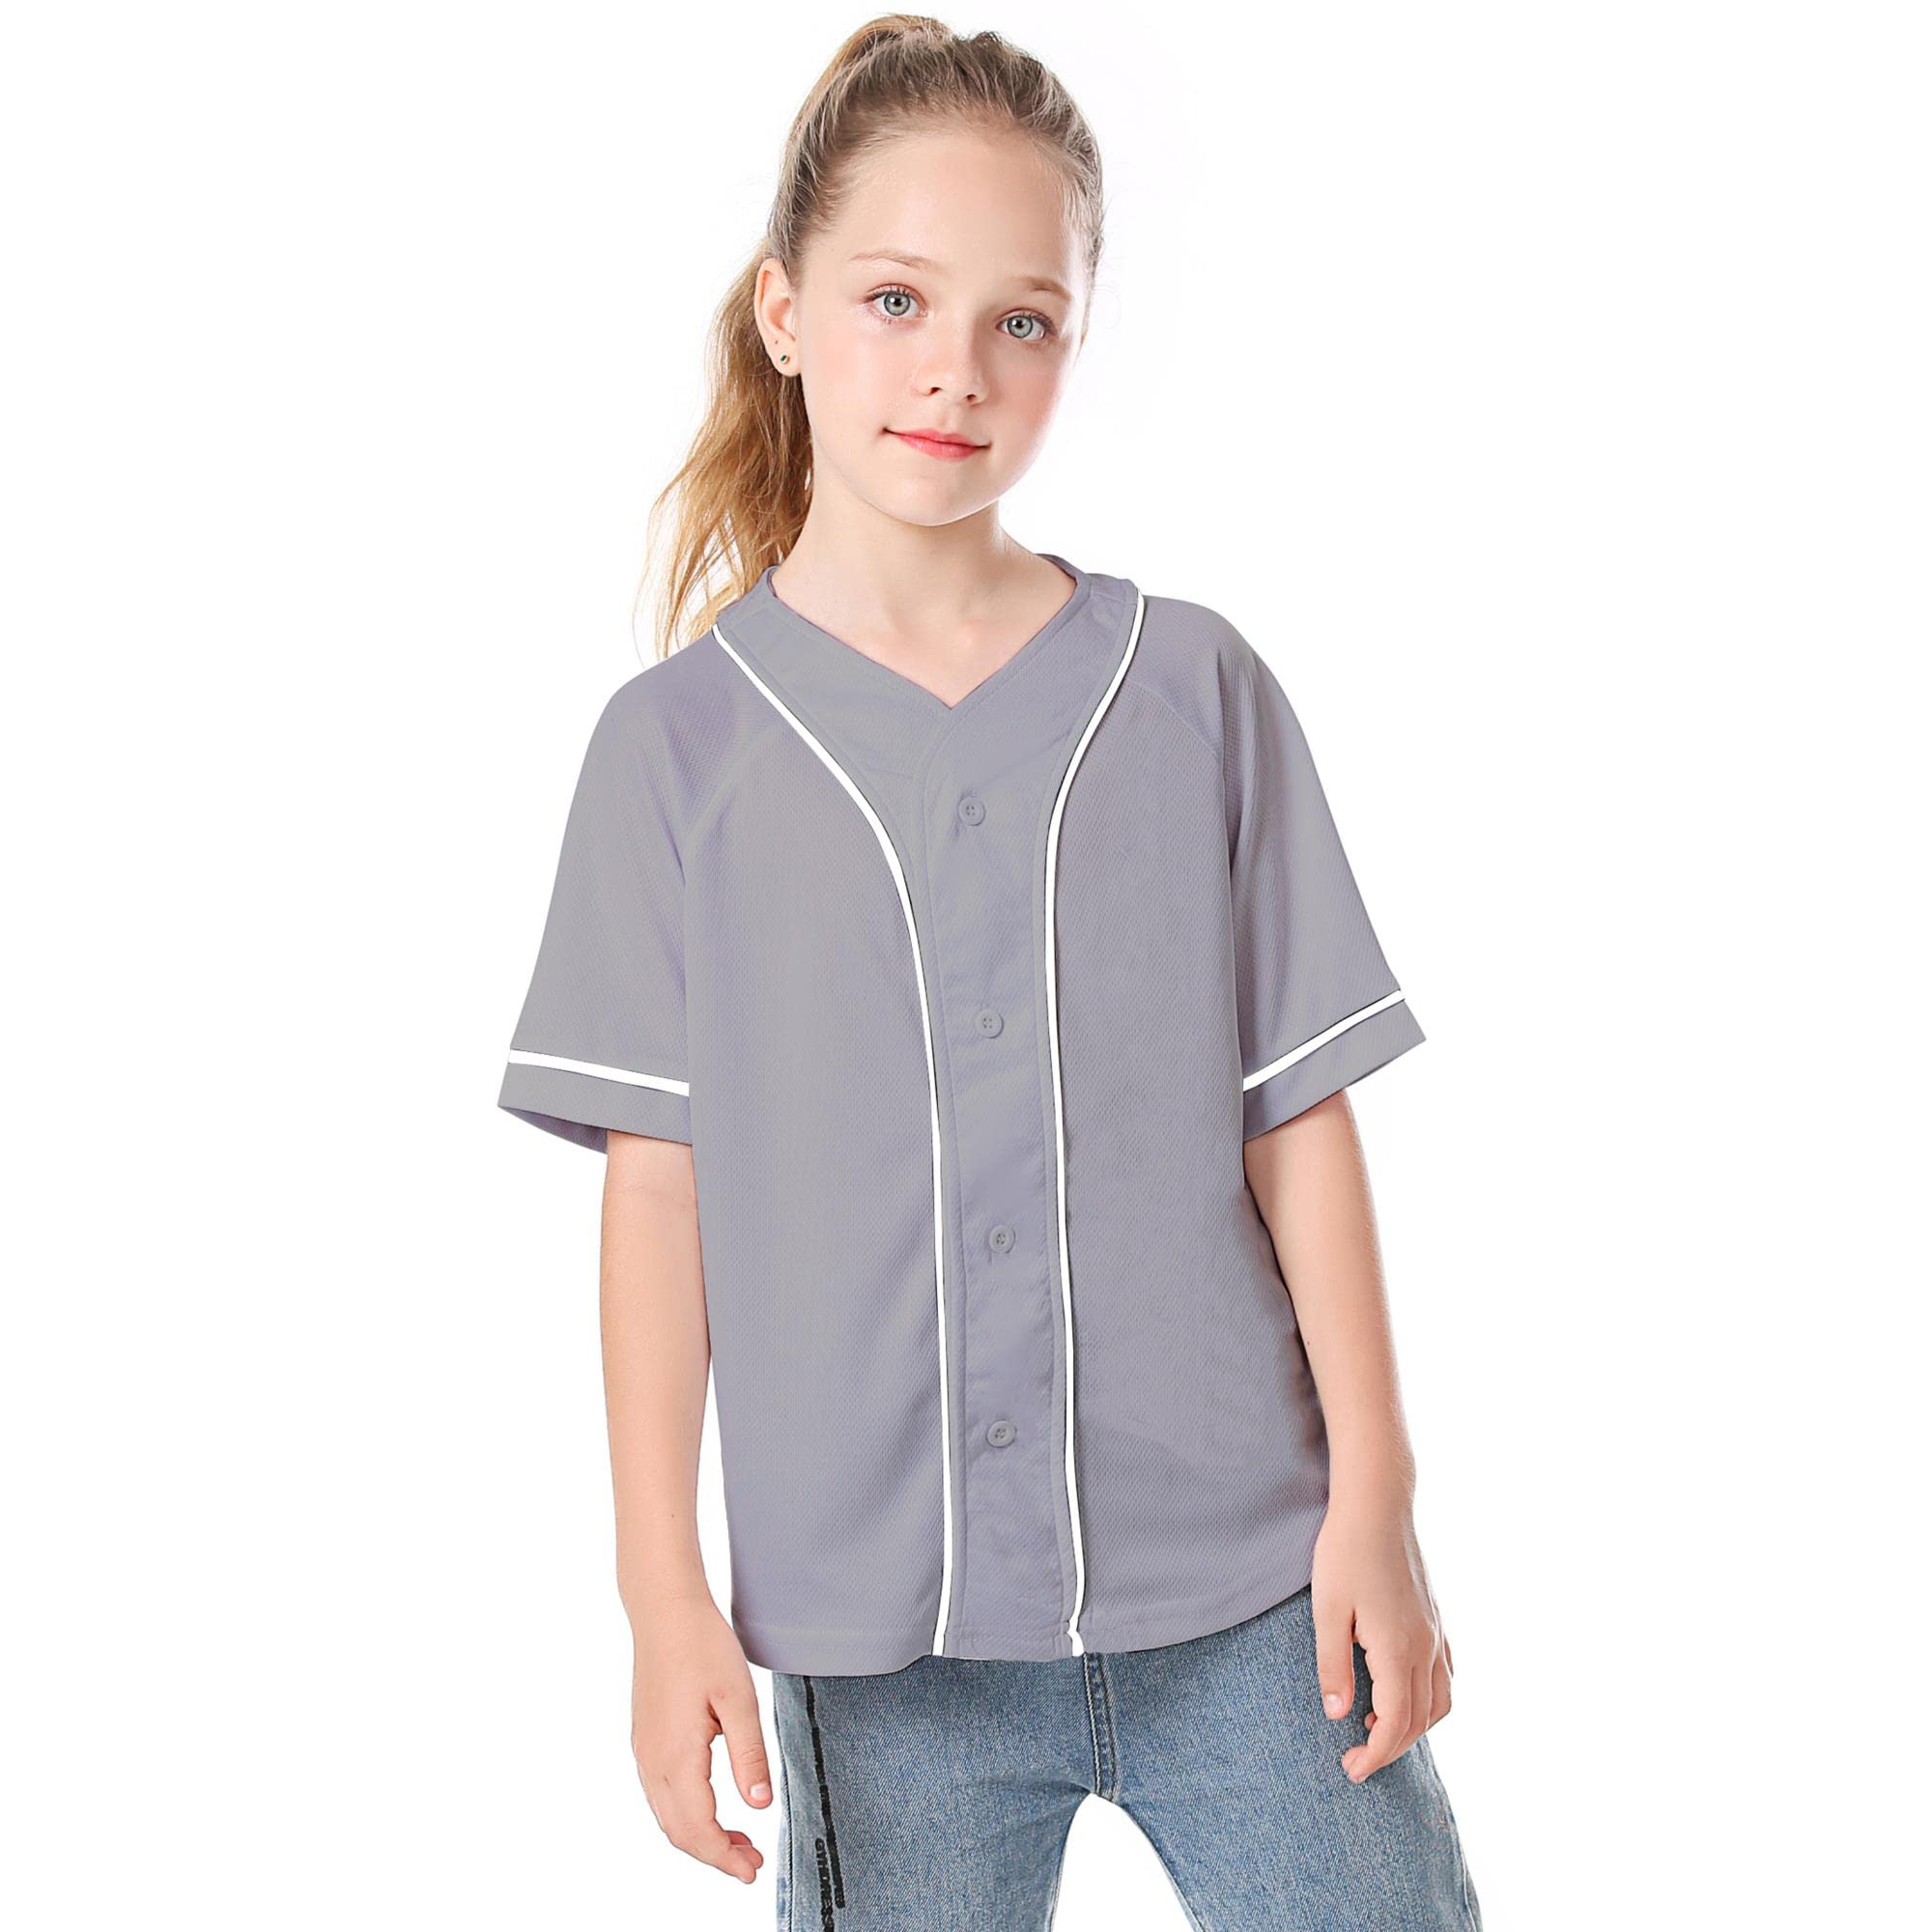 Icibgds Kids Baseball Jersey Button Boys T-Shirt Trendy Hip Hop Girls Black And White Short Sleeve Tshirt (Gray, 4T)